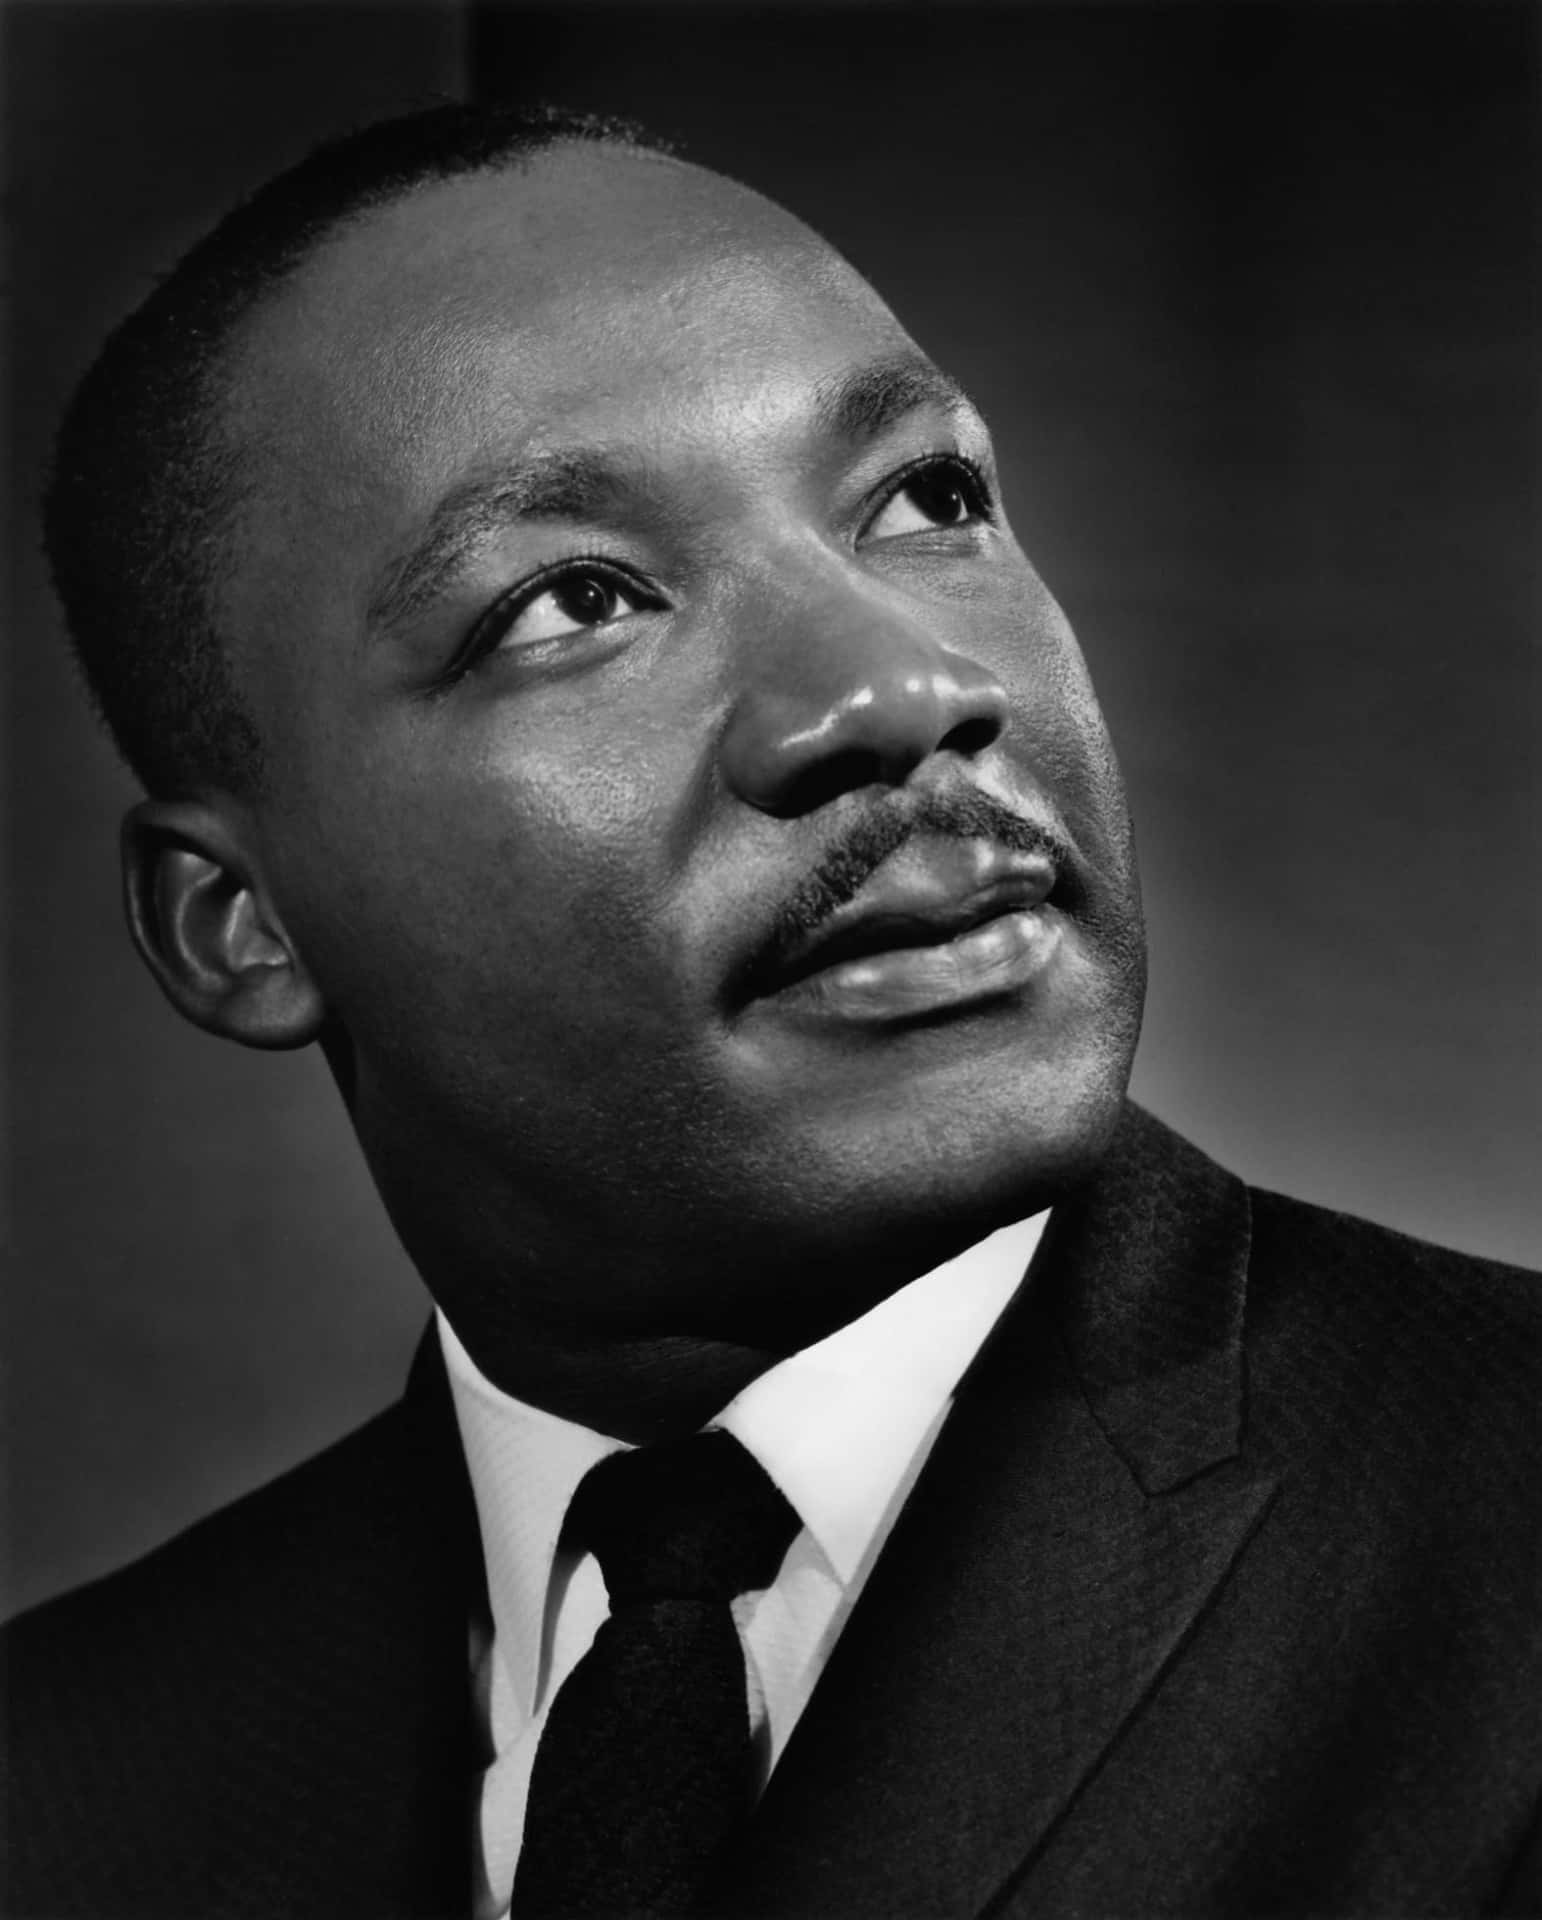 Porträtfotovon Martin Luther King, Jr.